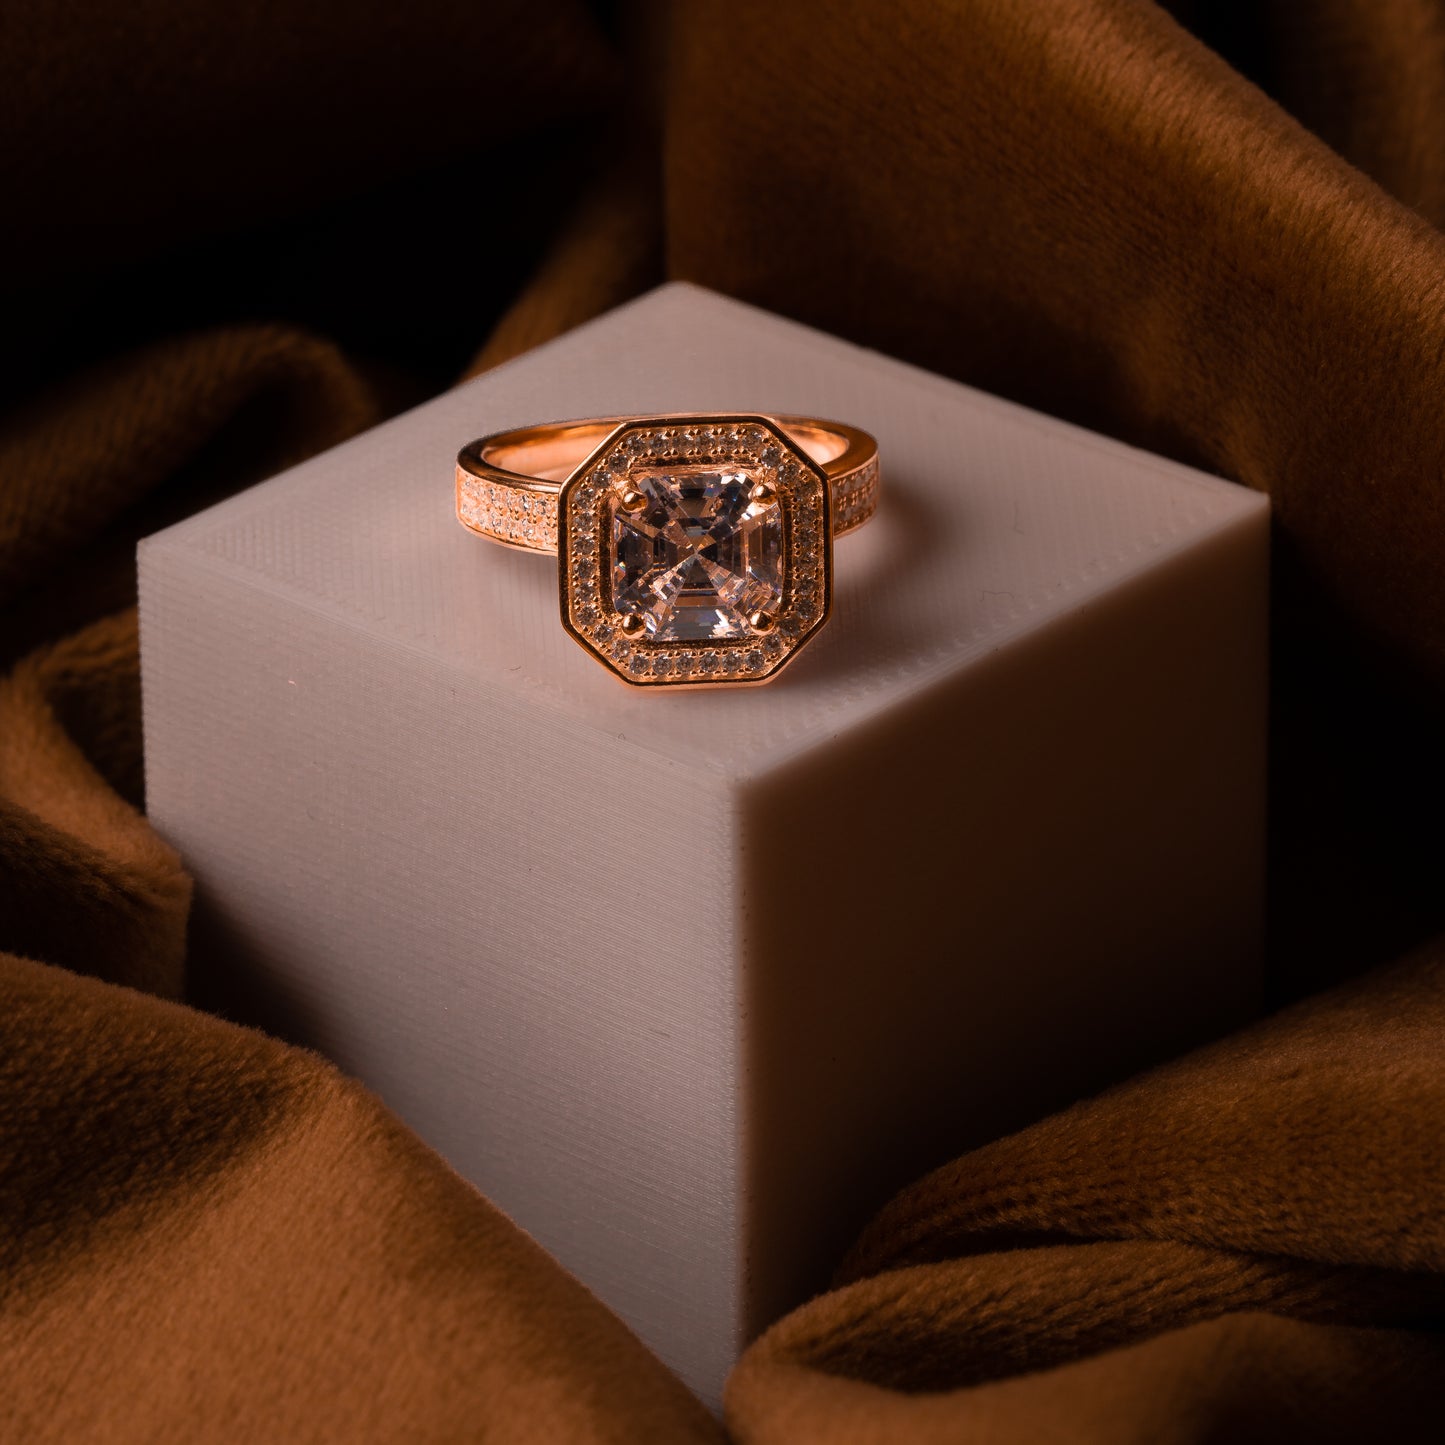 Rose Gold Crystal Sparkle Ring